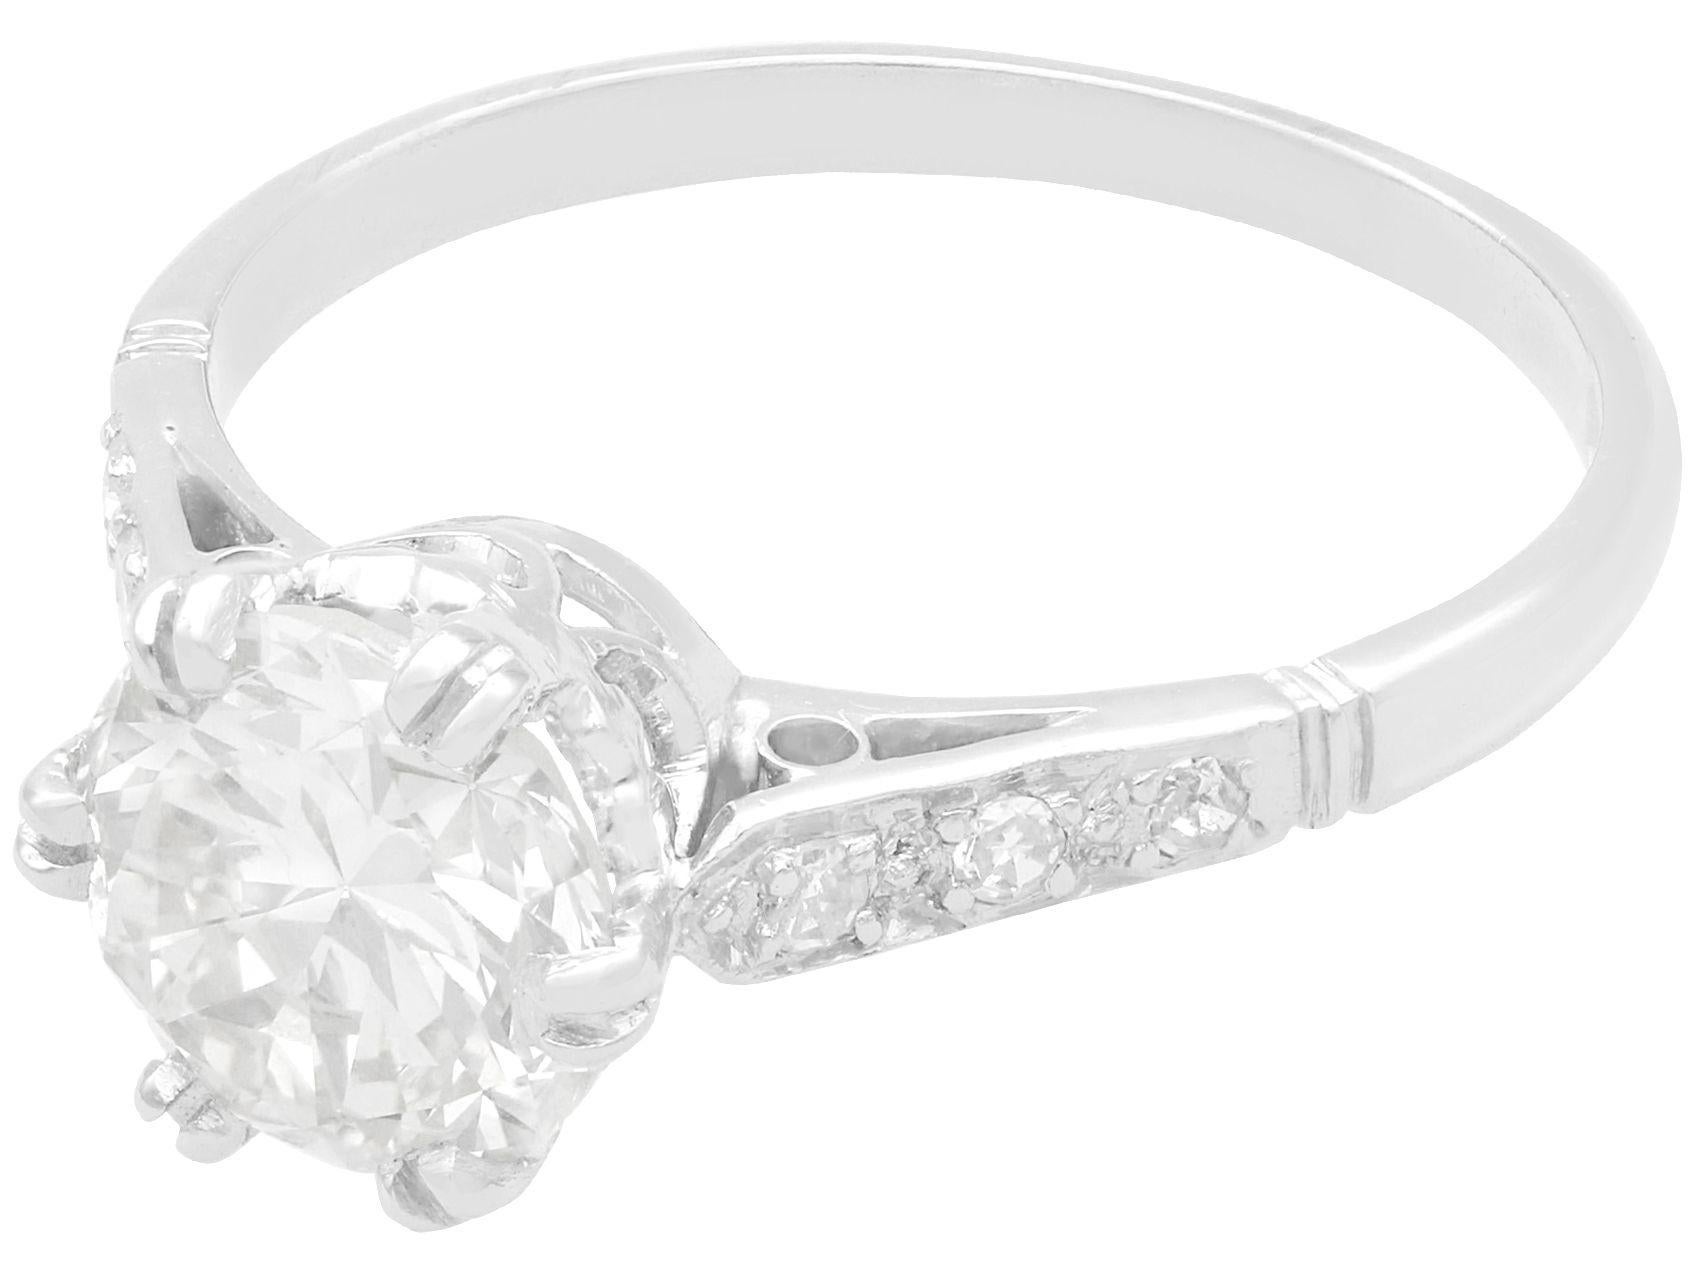 1.65 carat diamond ring